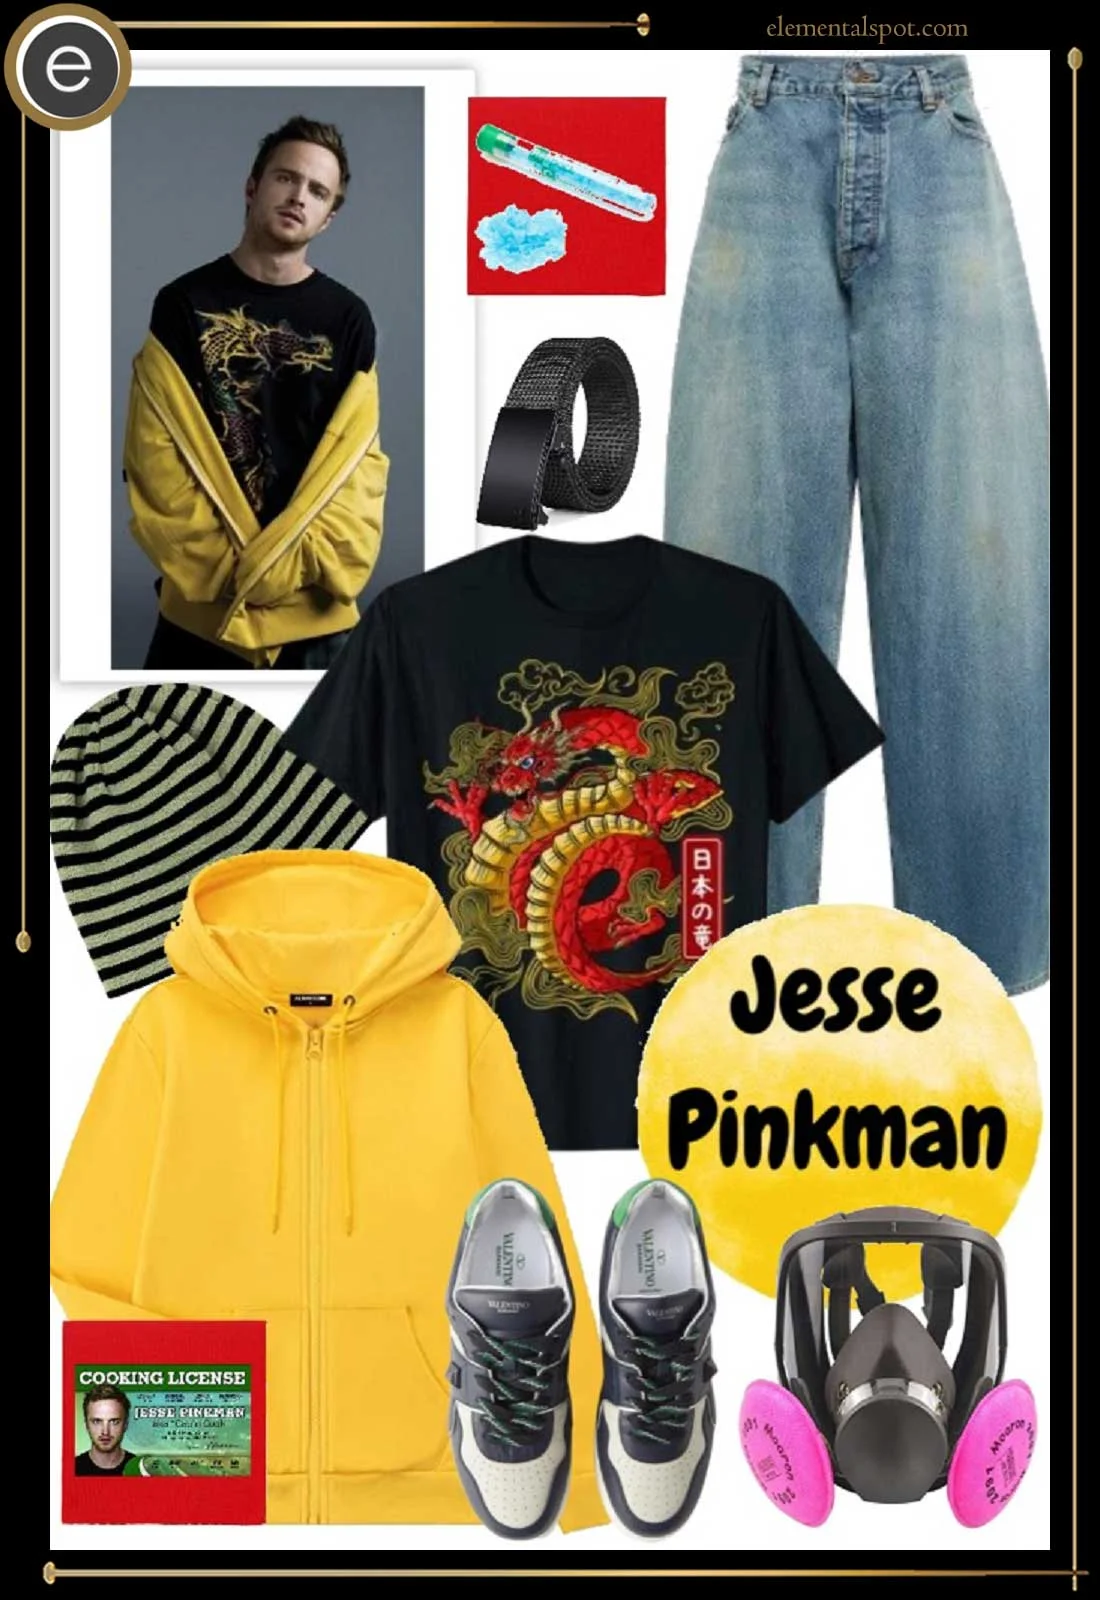 Jesse Pinkman (Breaking Bad) Costume For Cosplay Halloween, 53% OFF